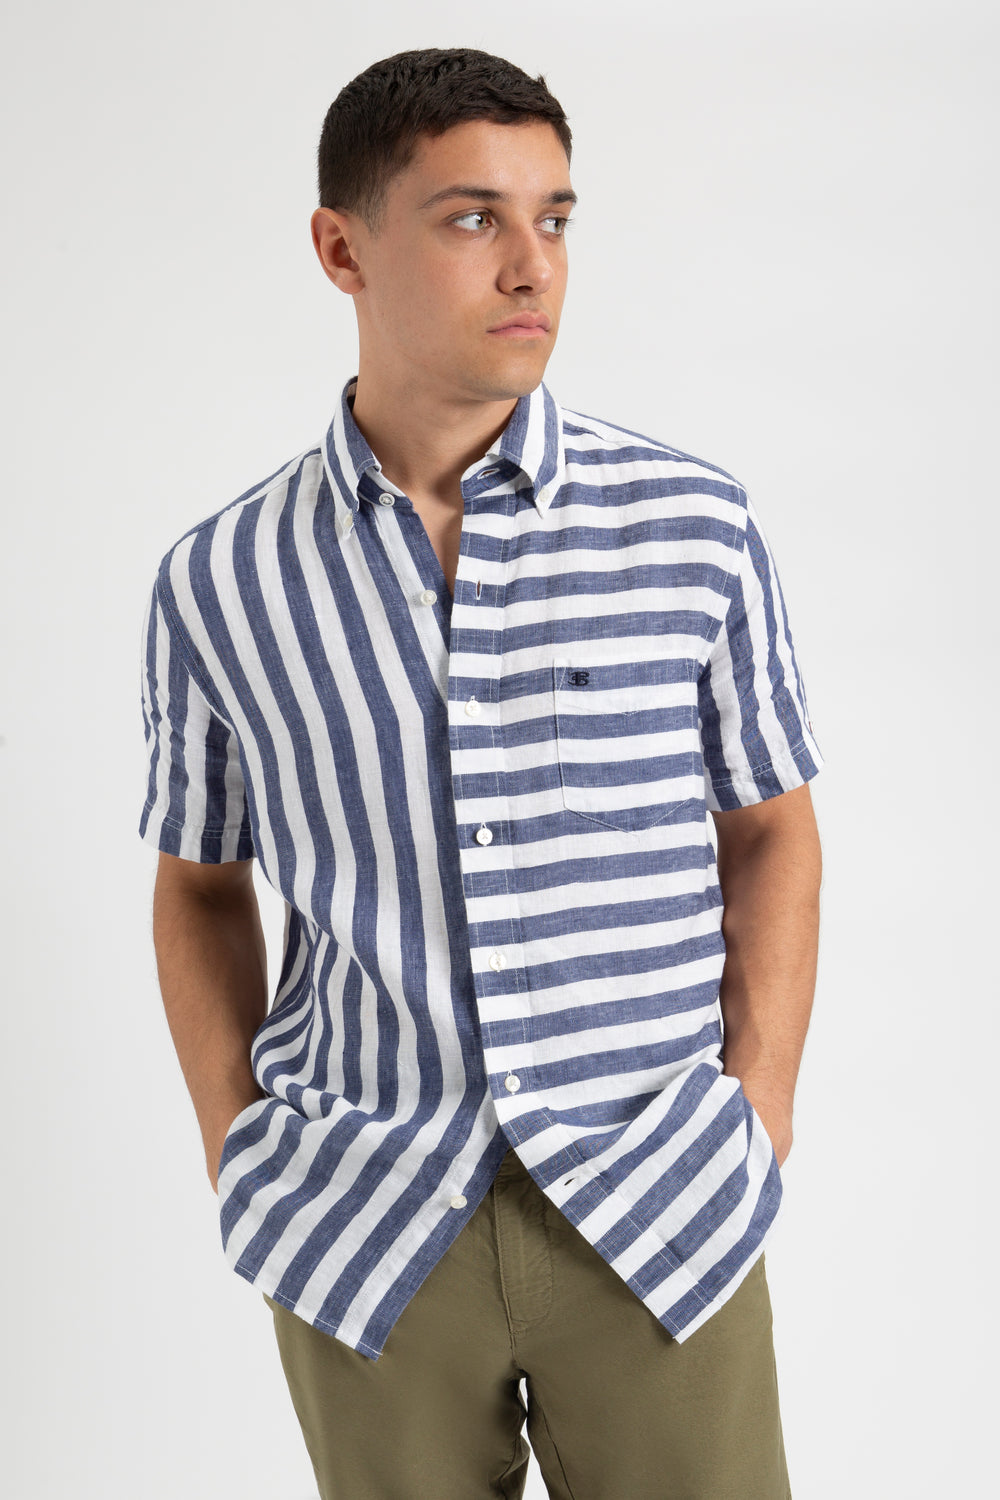 B by Ben Sherman Candy Stripe Linen Short Sleeve Shirt - Navy/Ecru